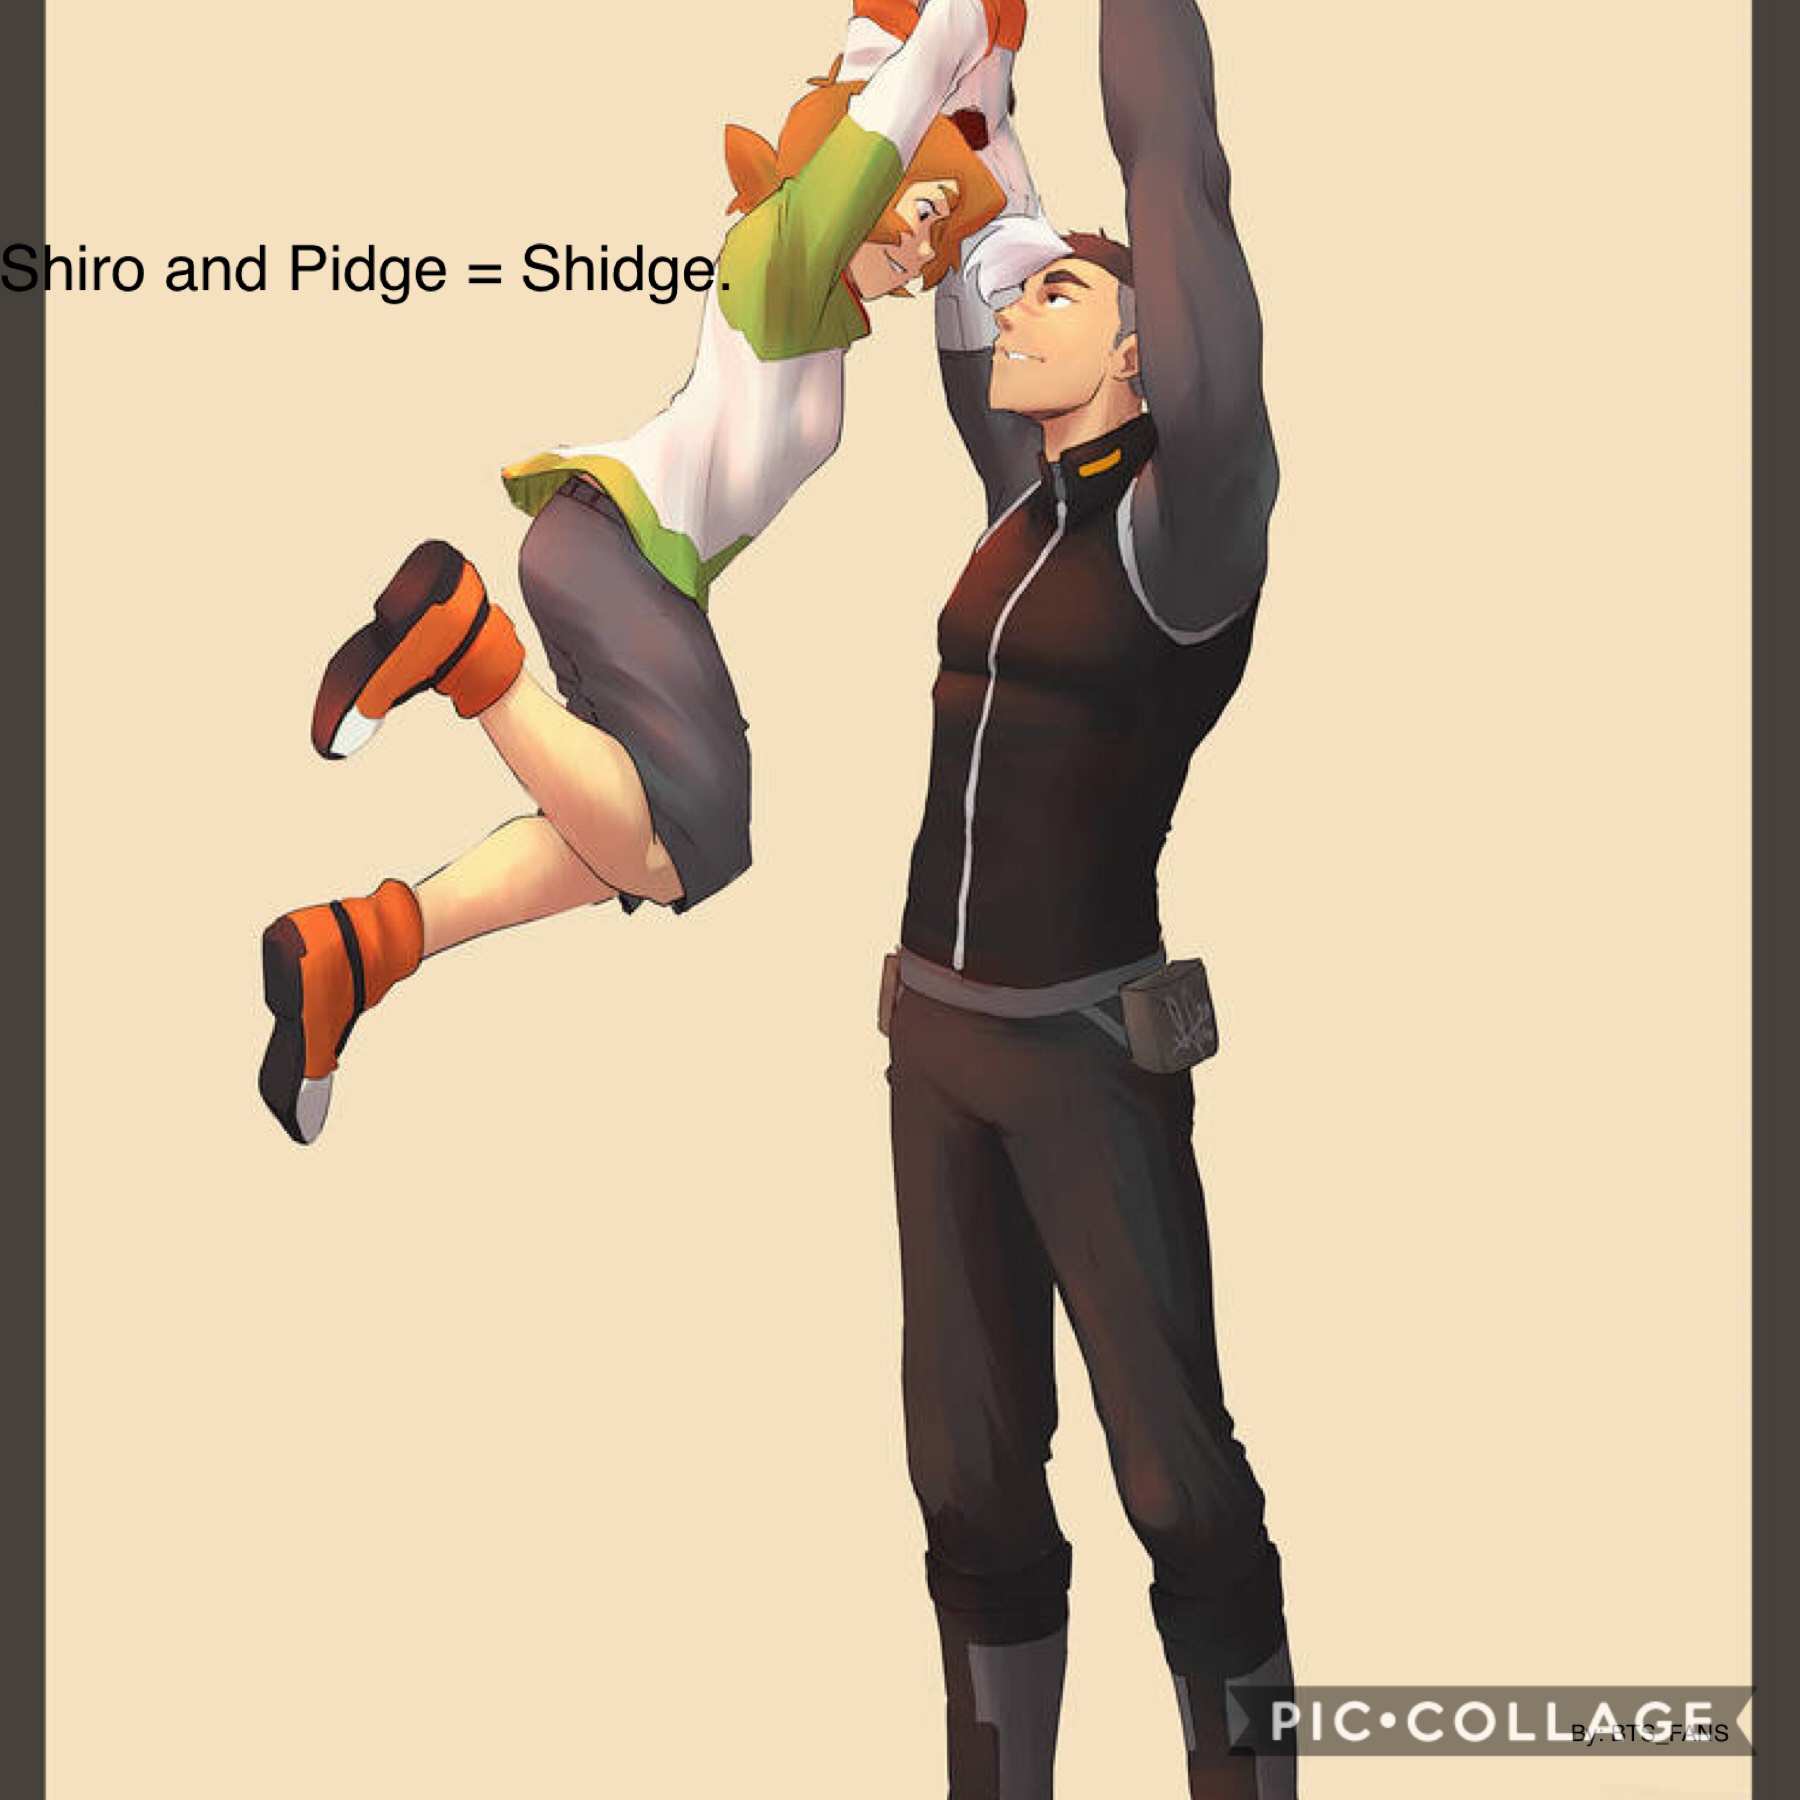 Shiro and Pidge = Shidge. (I just love these ships!)